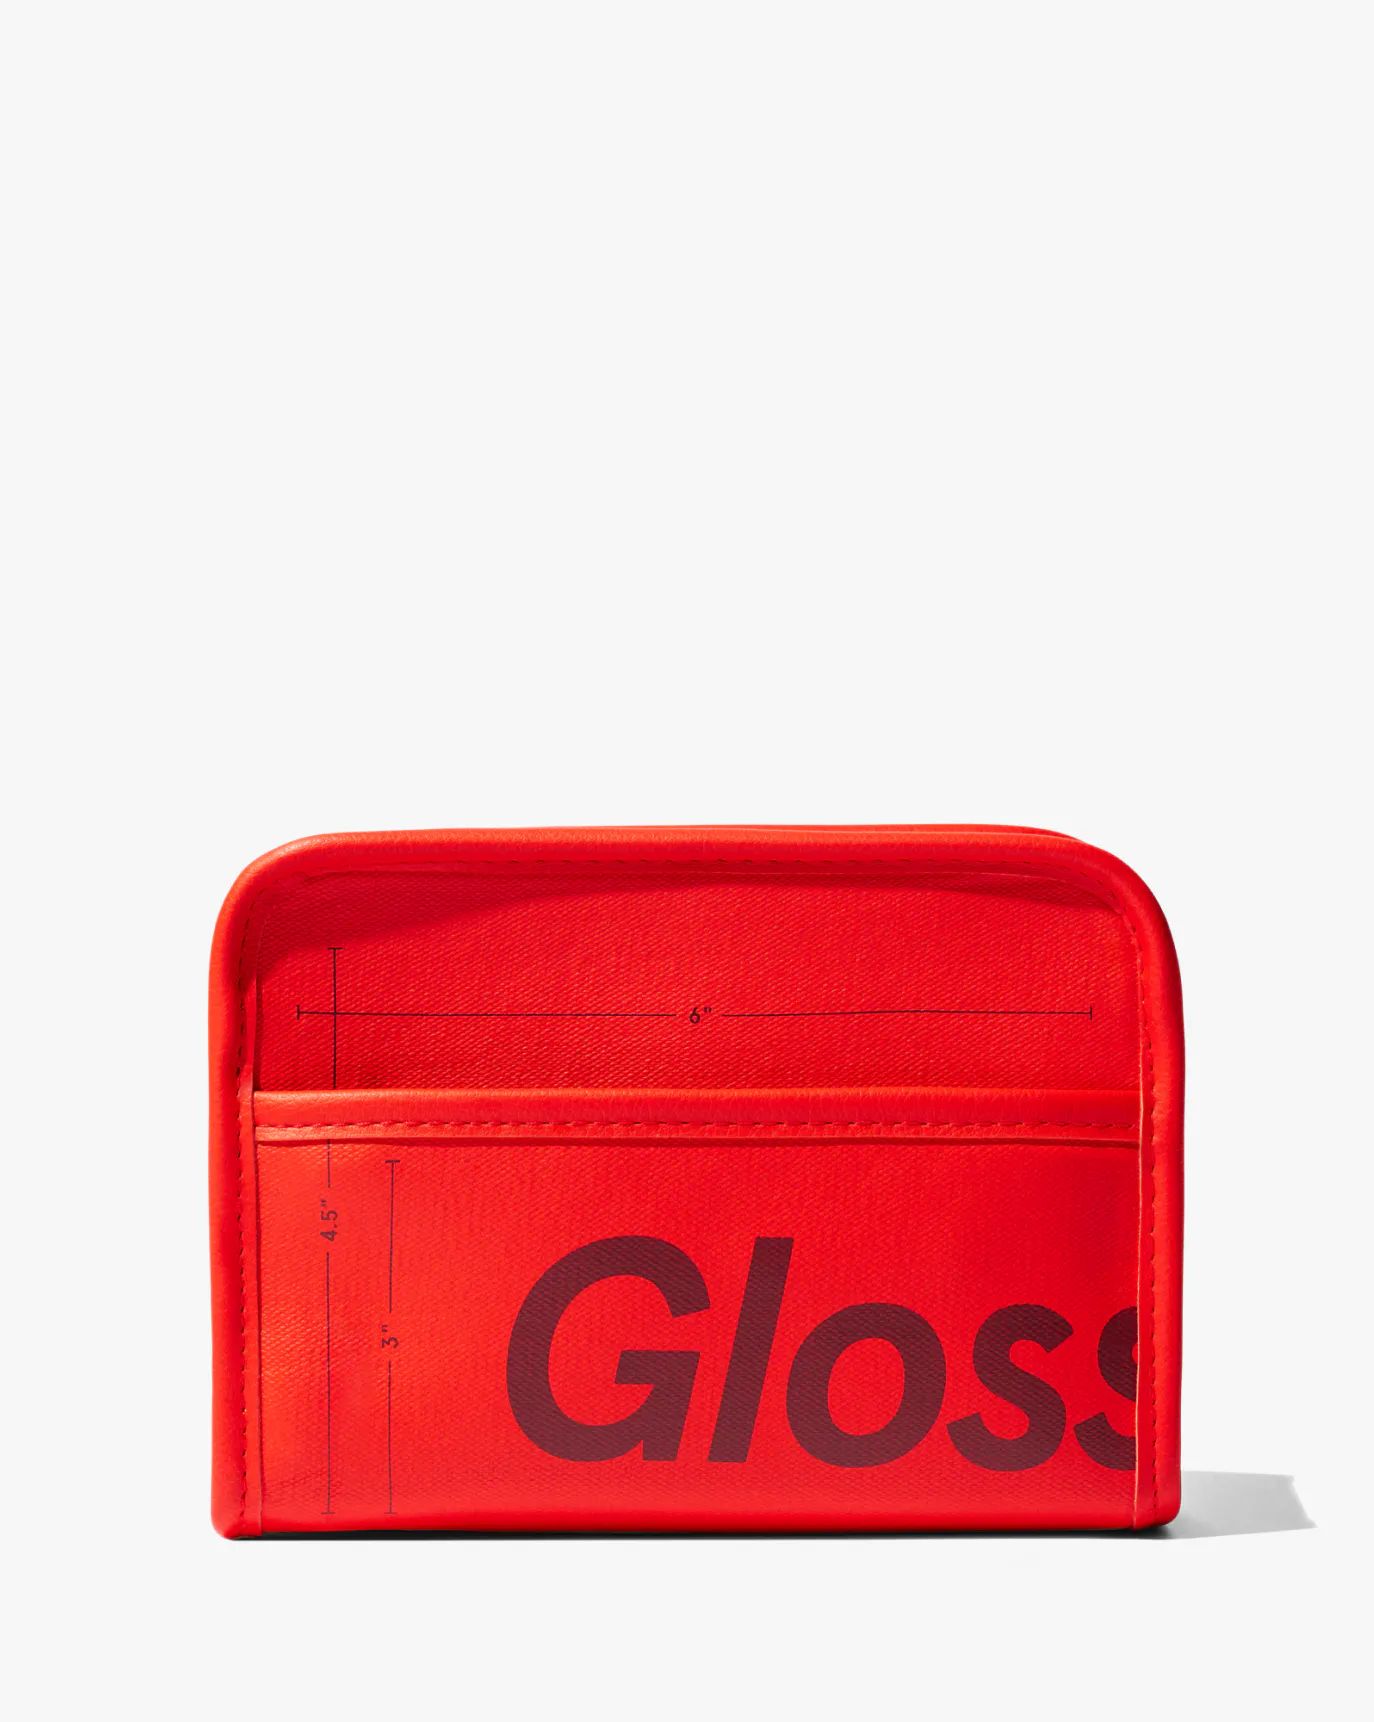 Mini Beauty Bag | Glossier